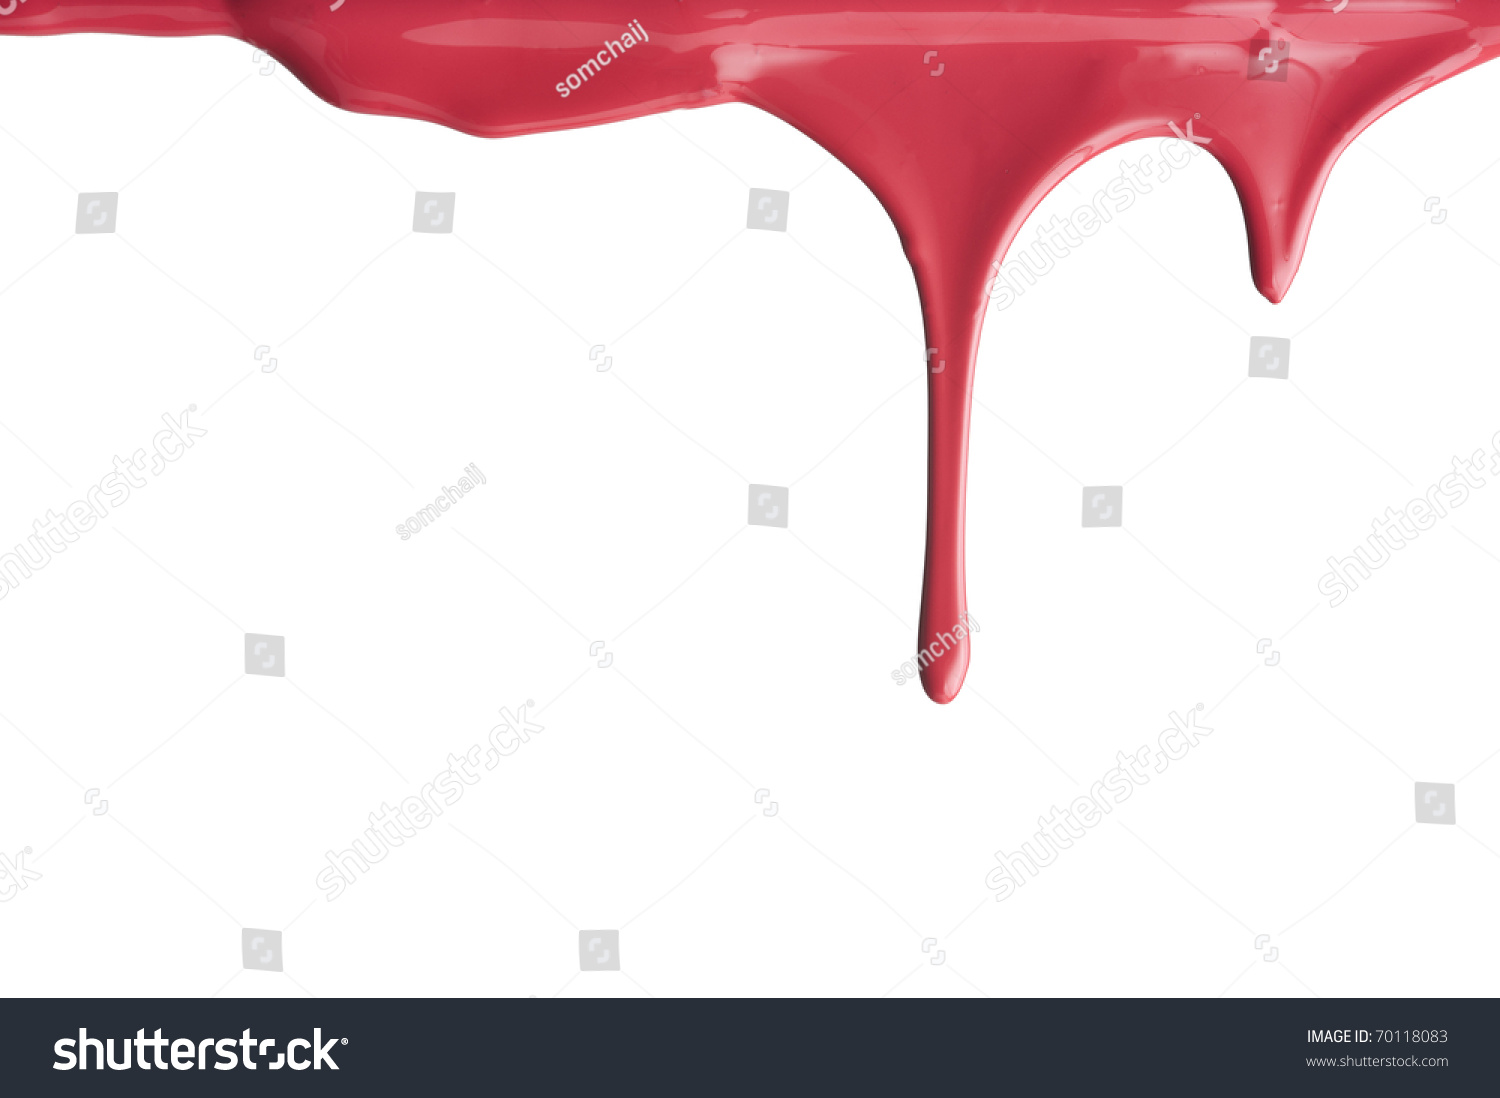 Paint Dripping Stock Photo 70118083 : Shutterstock